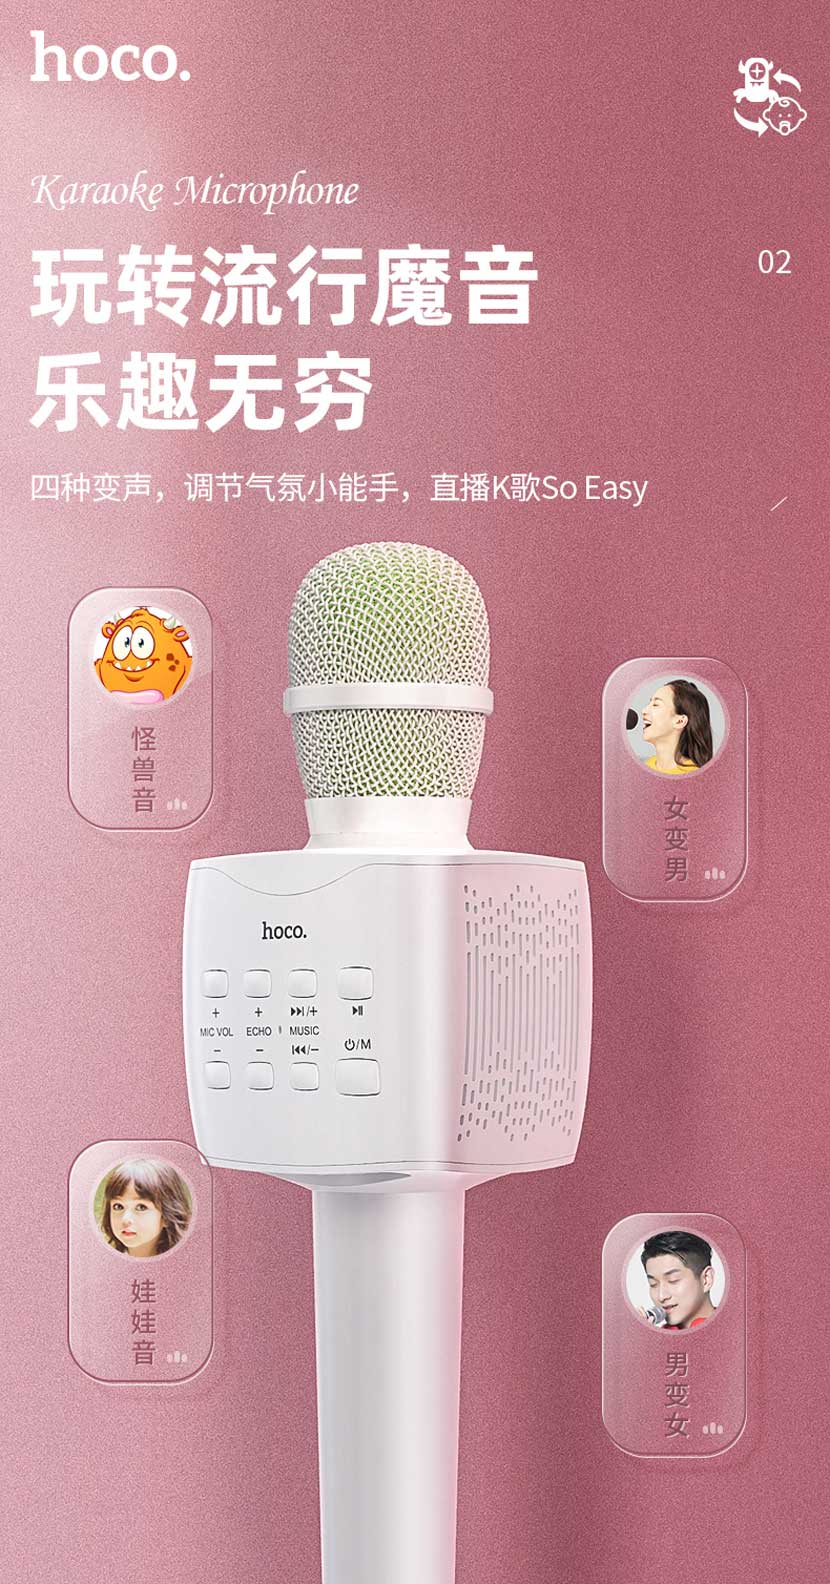 hoco news bk5 cantando karaoke microphone magic sound cn